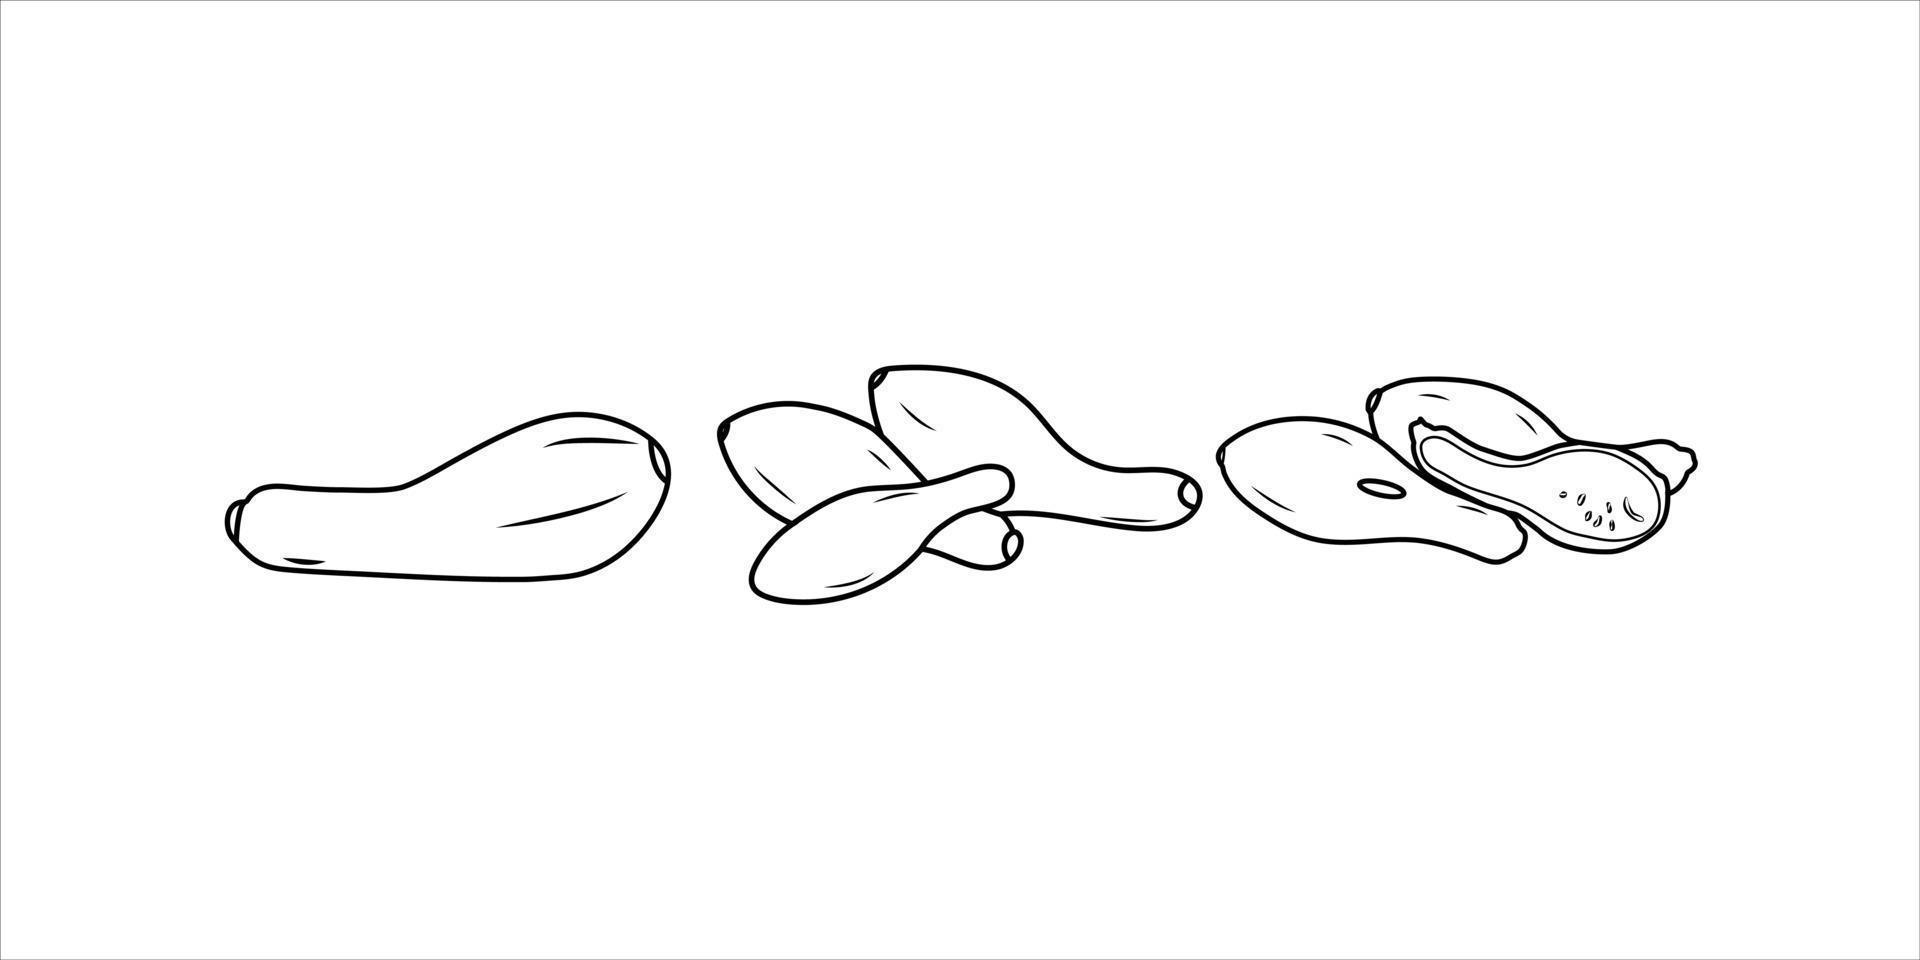 Flat vector of Crookneck doodle isolated on white background. Flat illustration icon.